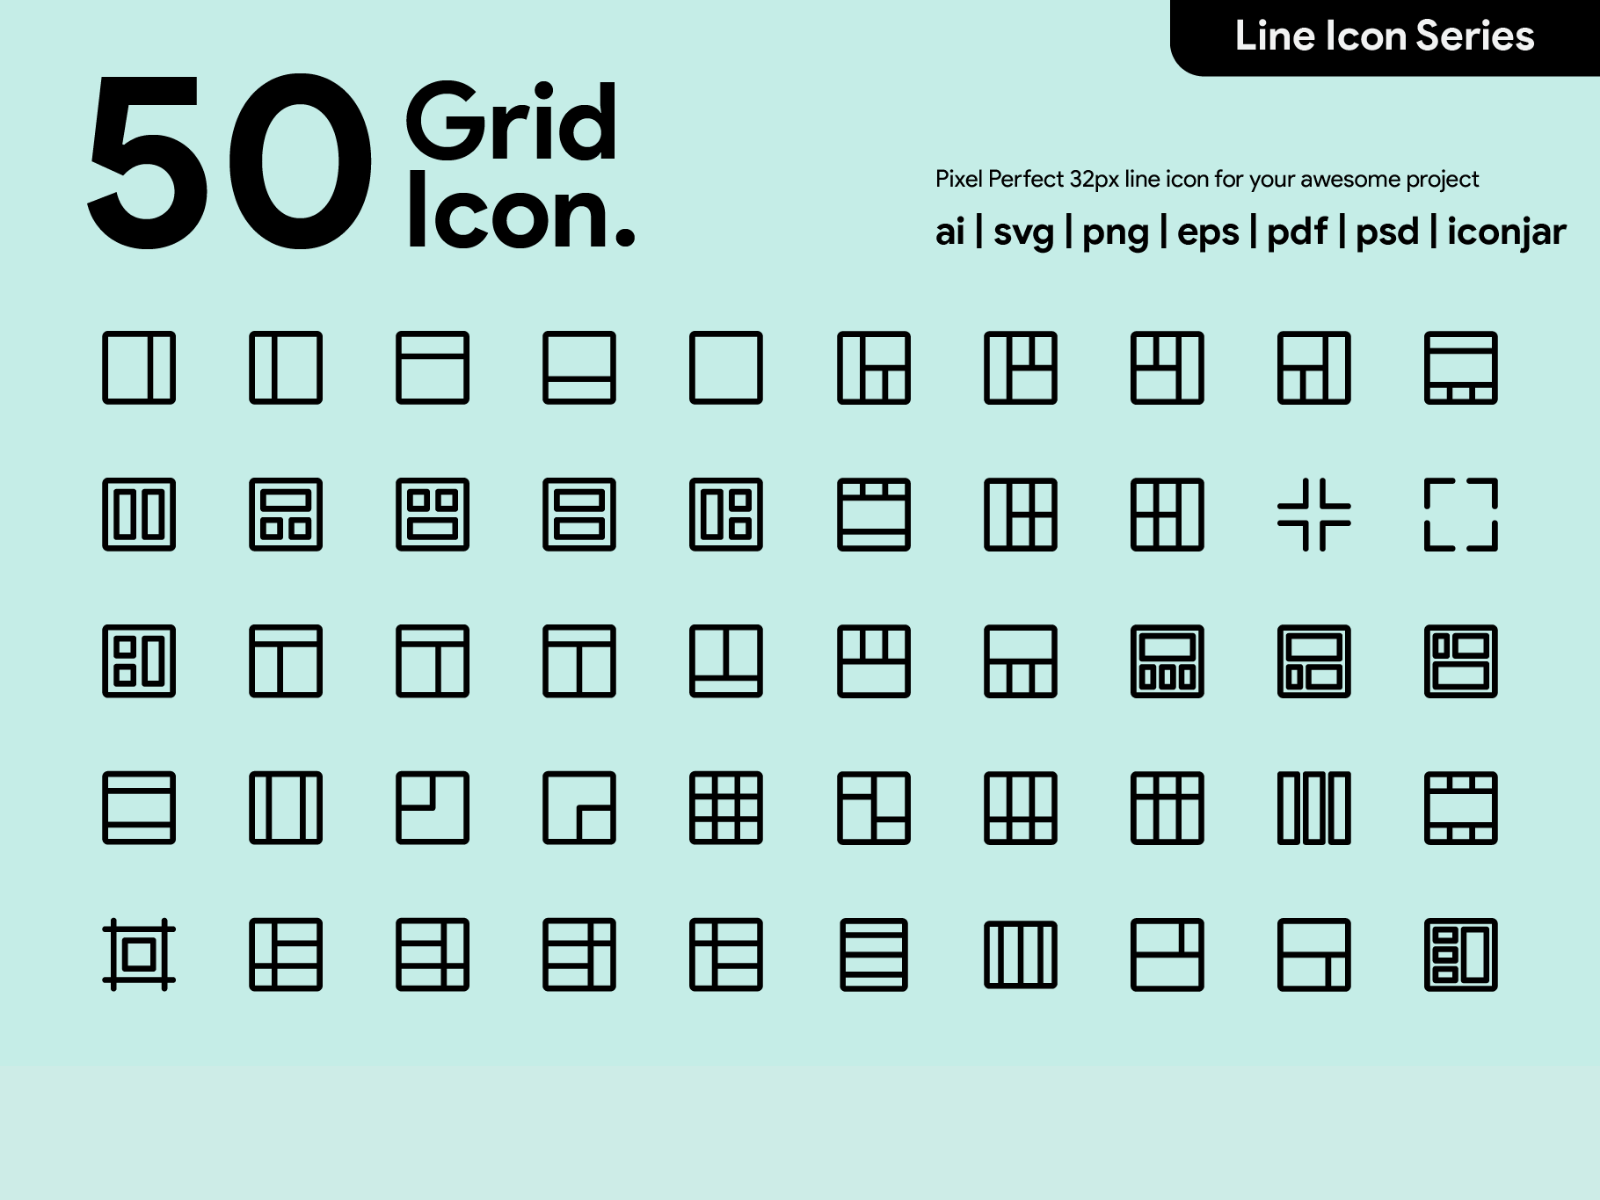 App icons design idea #286: Kawaicon - 50 Grid Line Icon